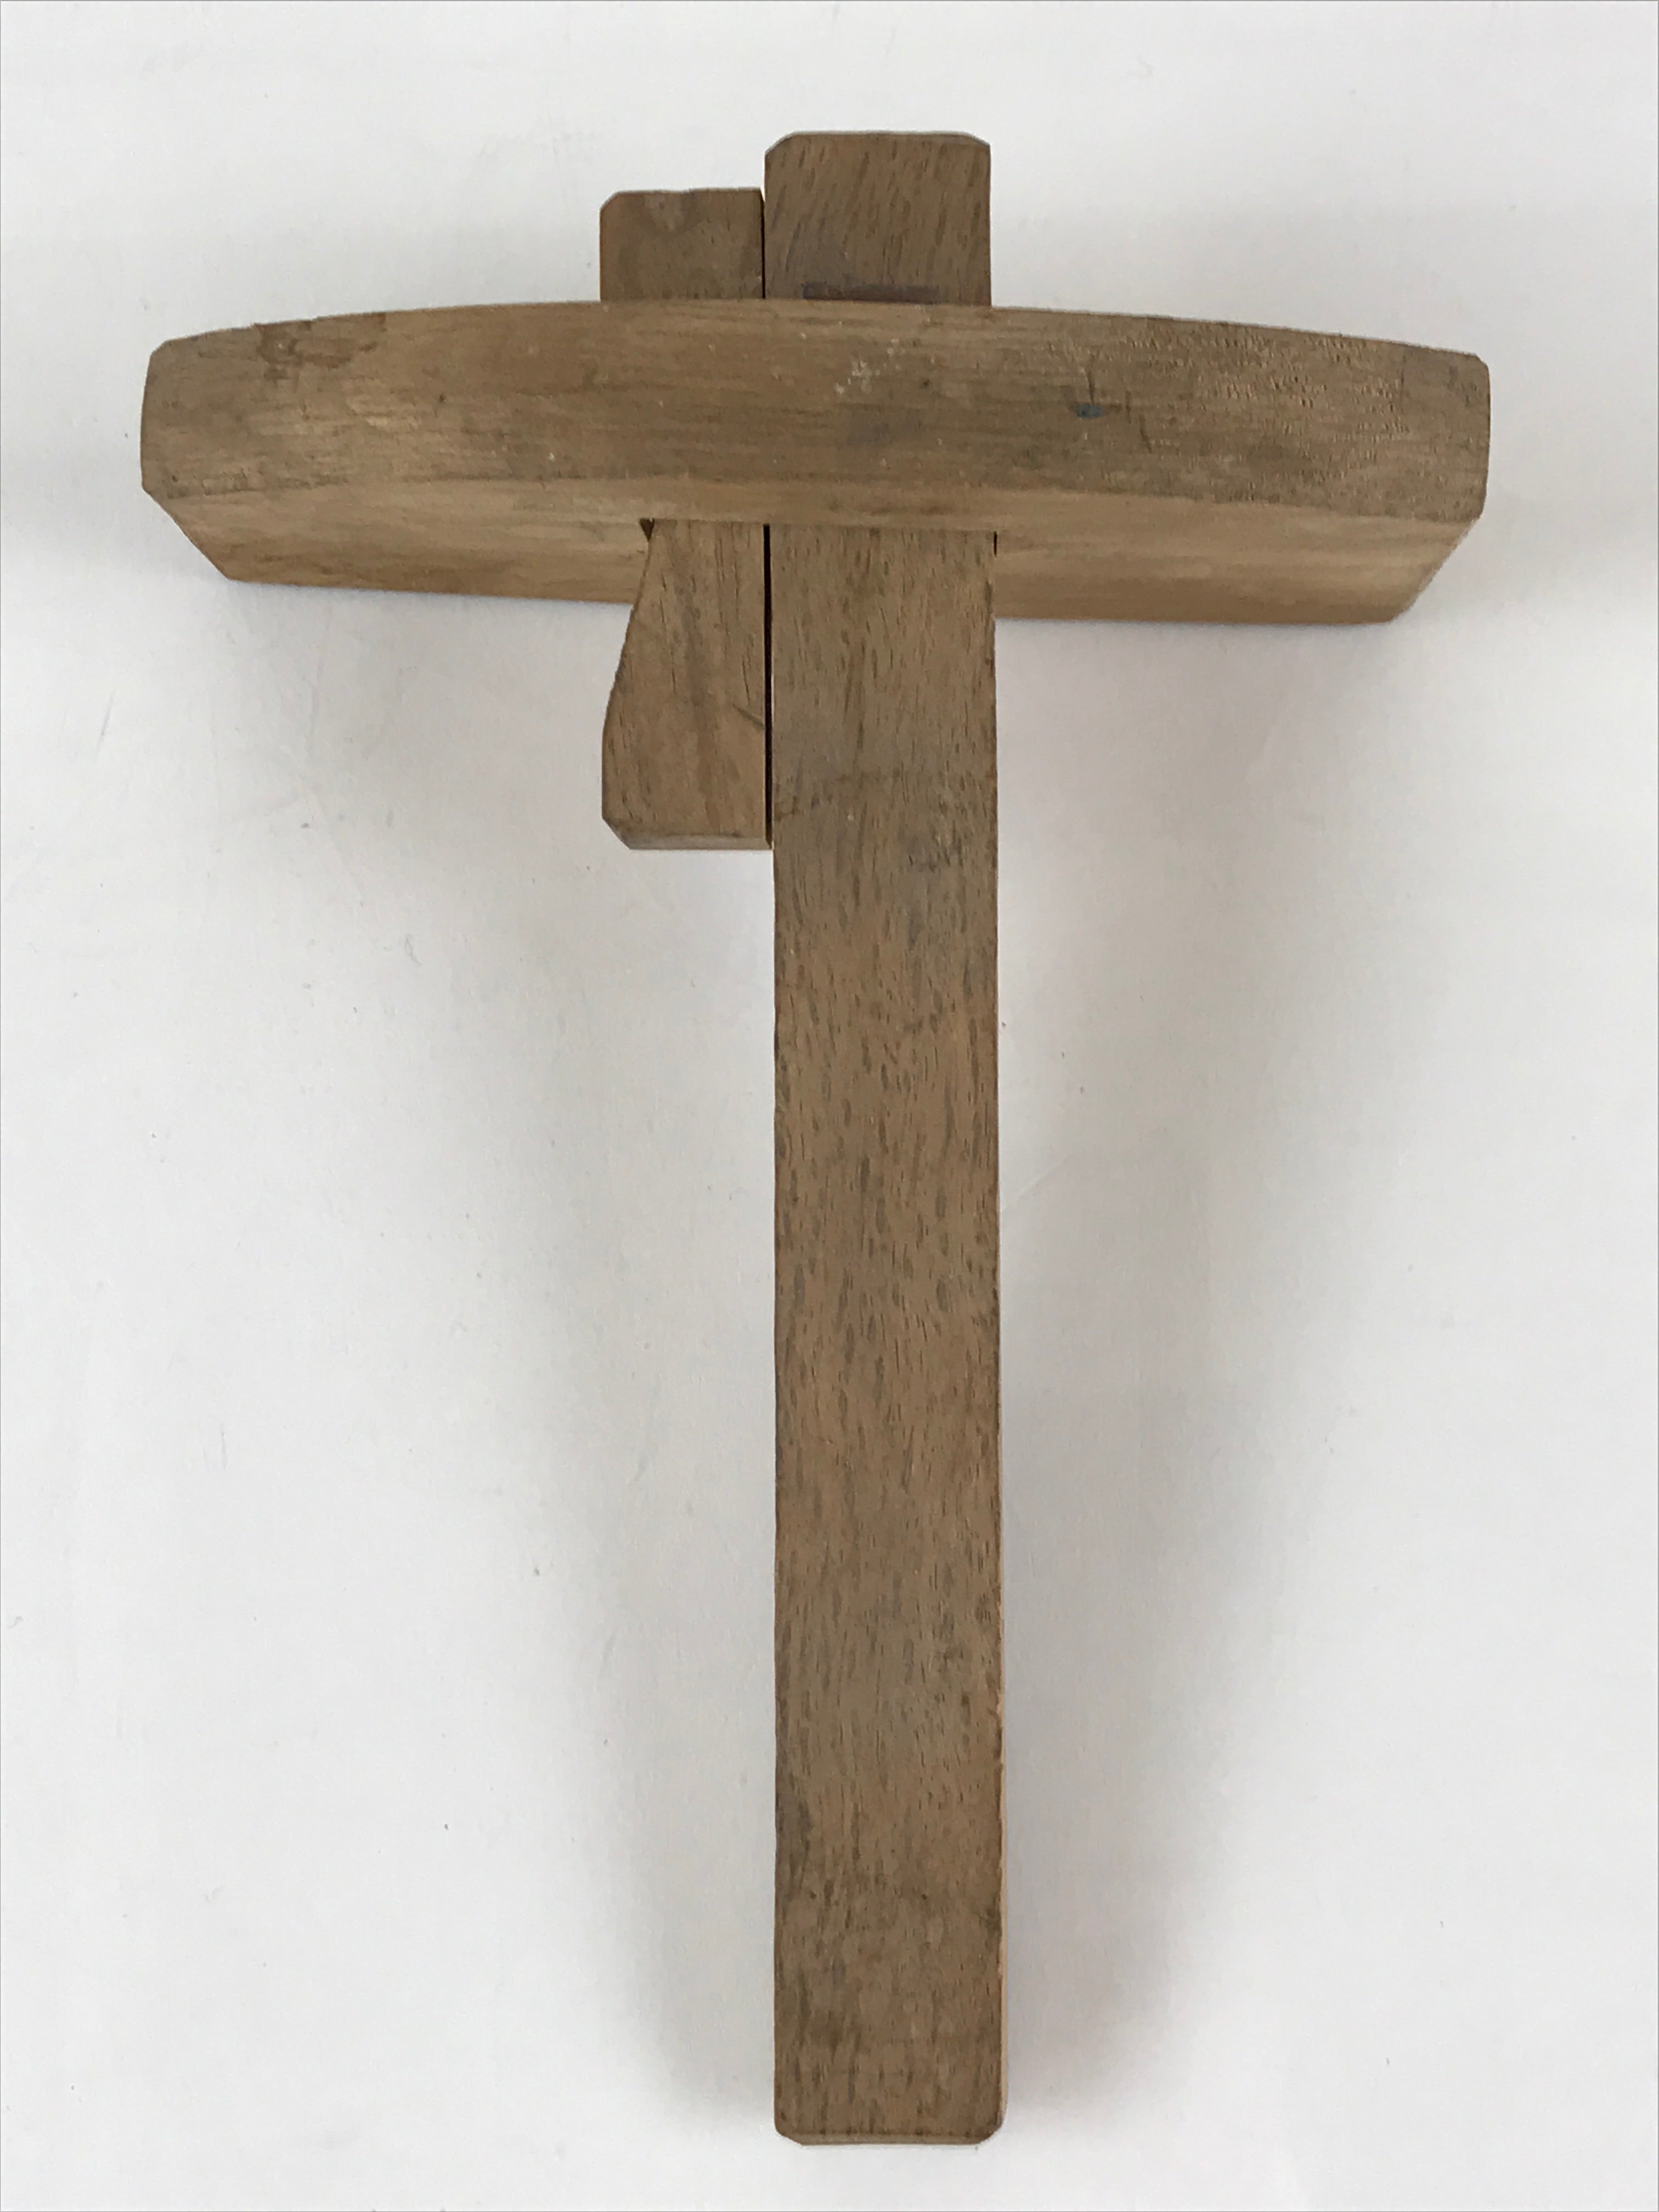 Japanese Woodworking Marking Guide Gauge Vtg Suji-Kebiki Carpentry Tool K447